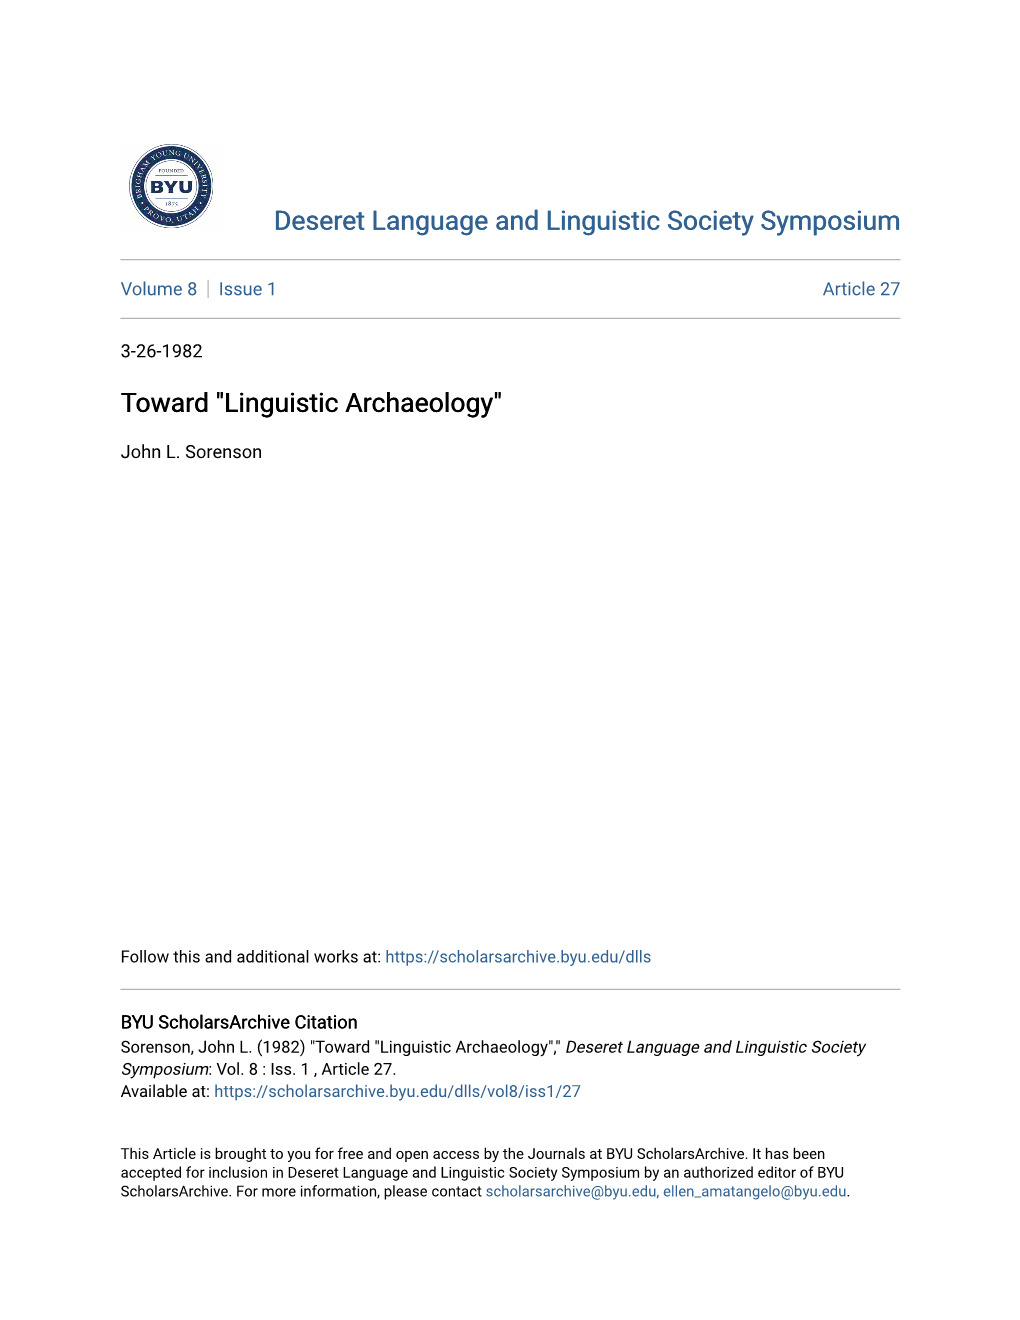 Toward "Linguistic Archaeology"